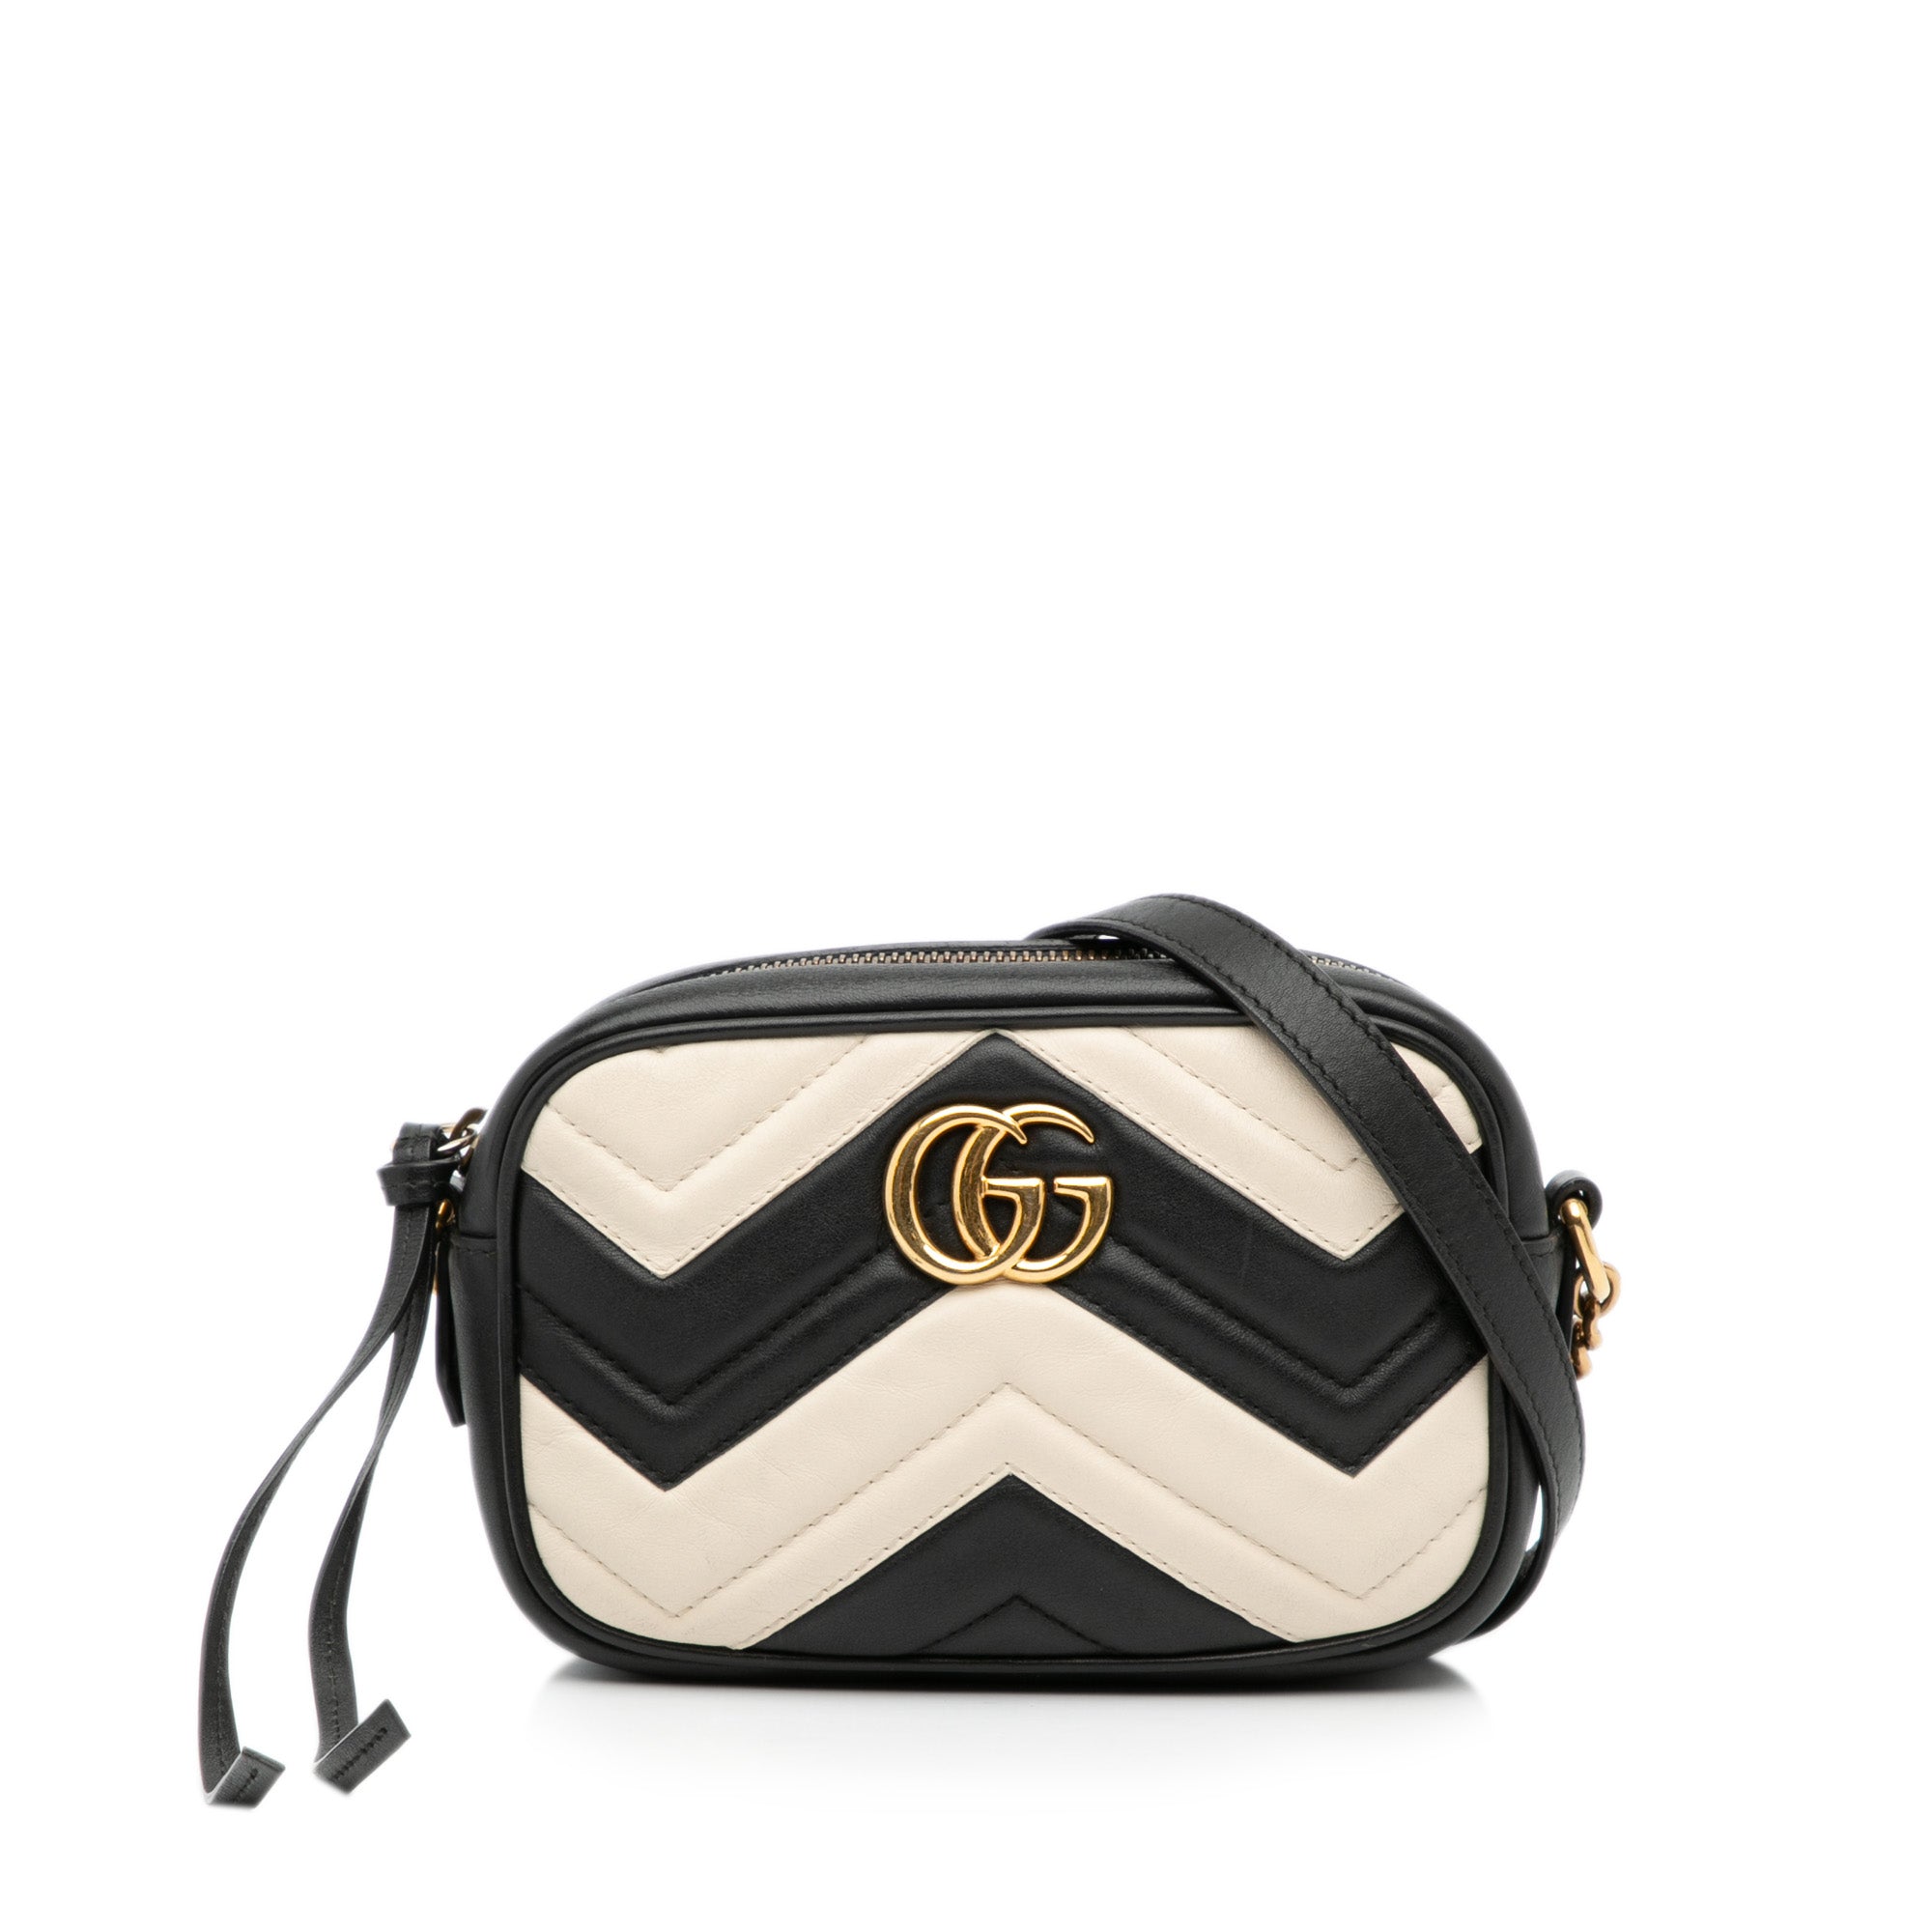 Gucci GG Marmont Matelasse Camera Bag